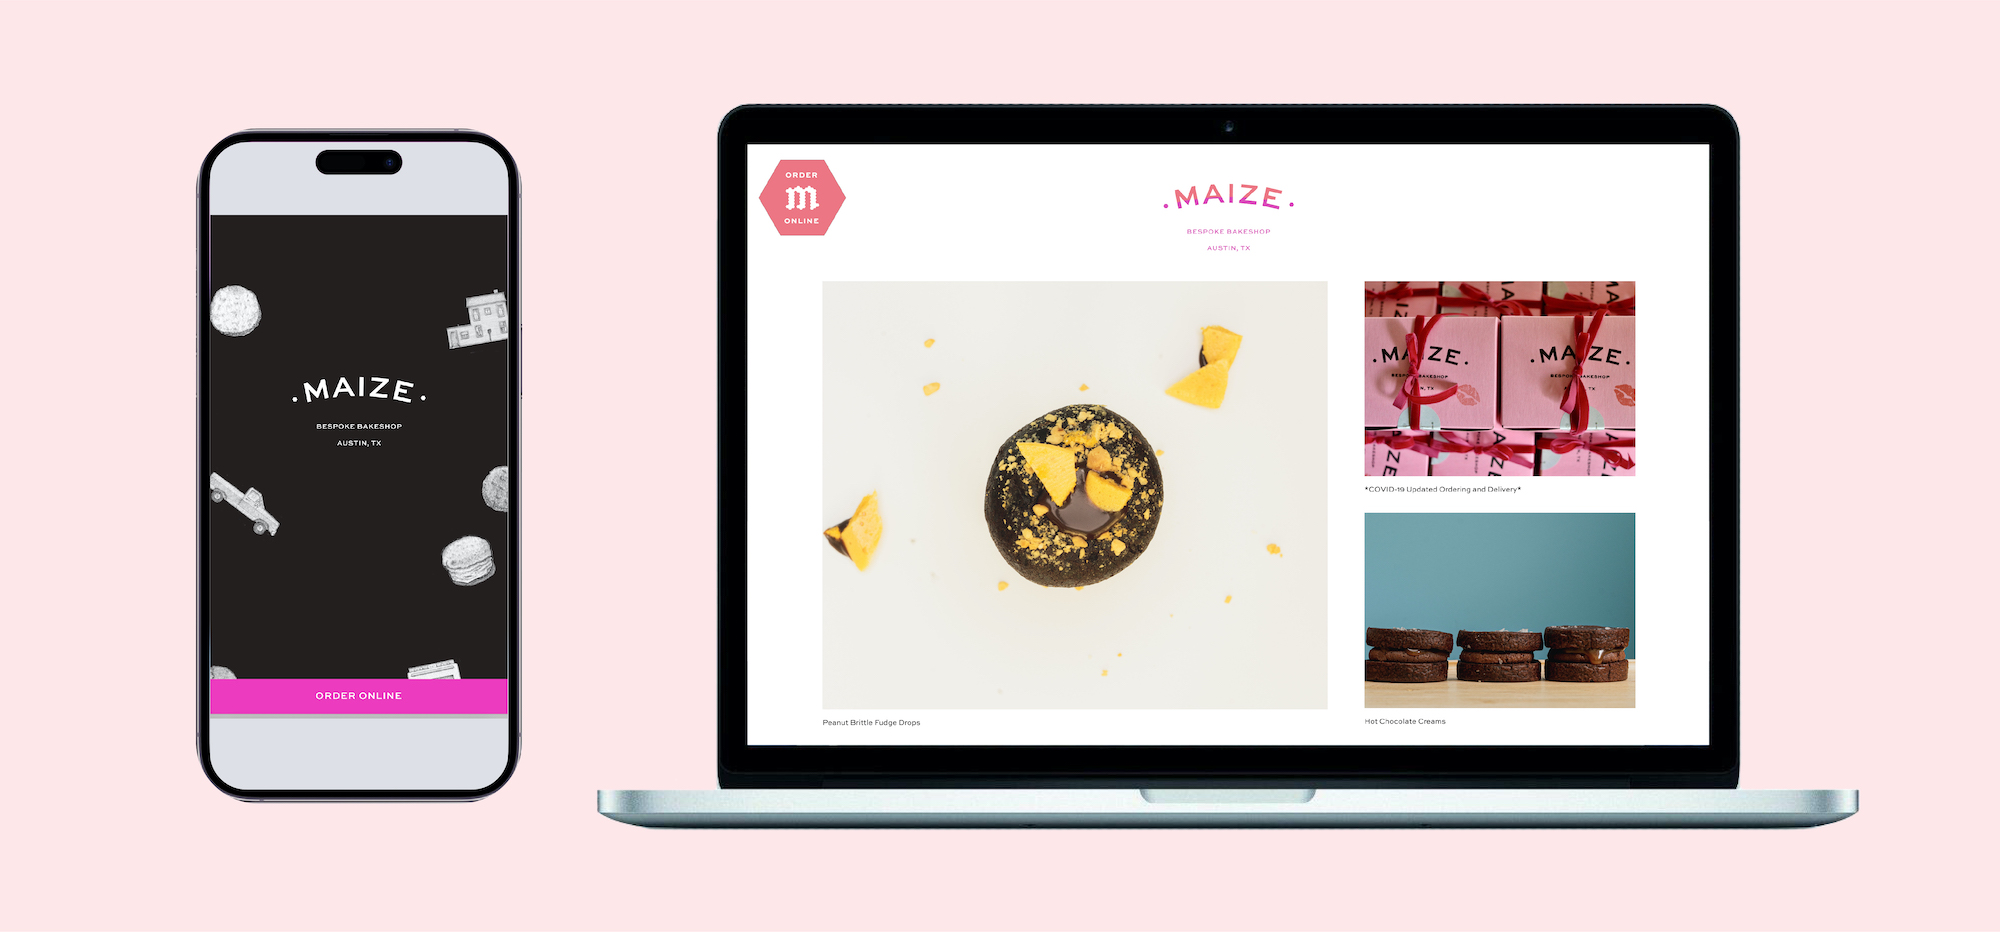 Maize Bakery website, mobile and desktop views featuring branding elements.